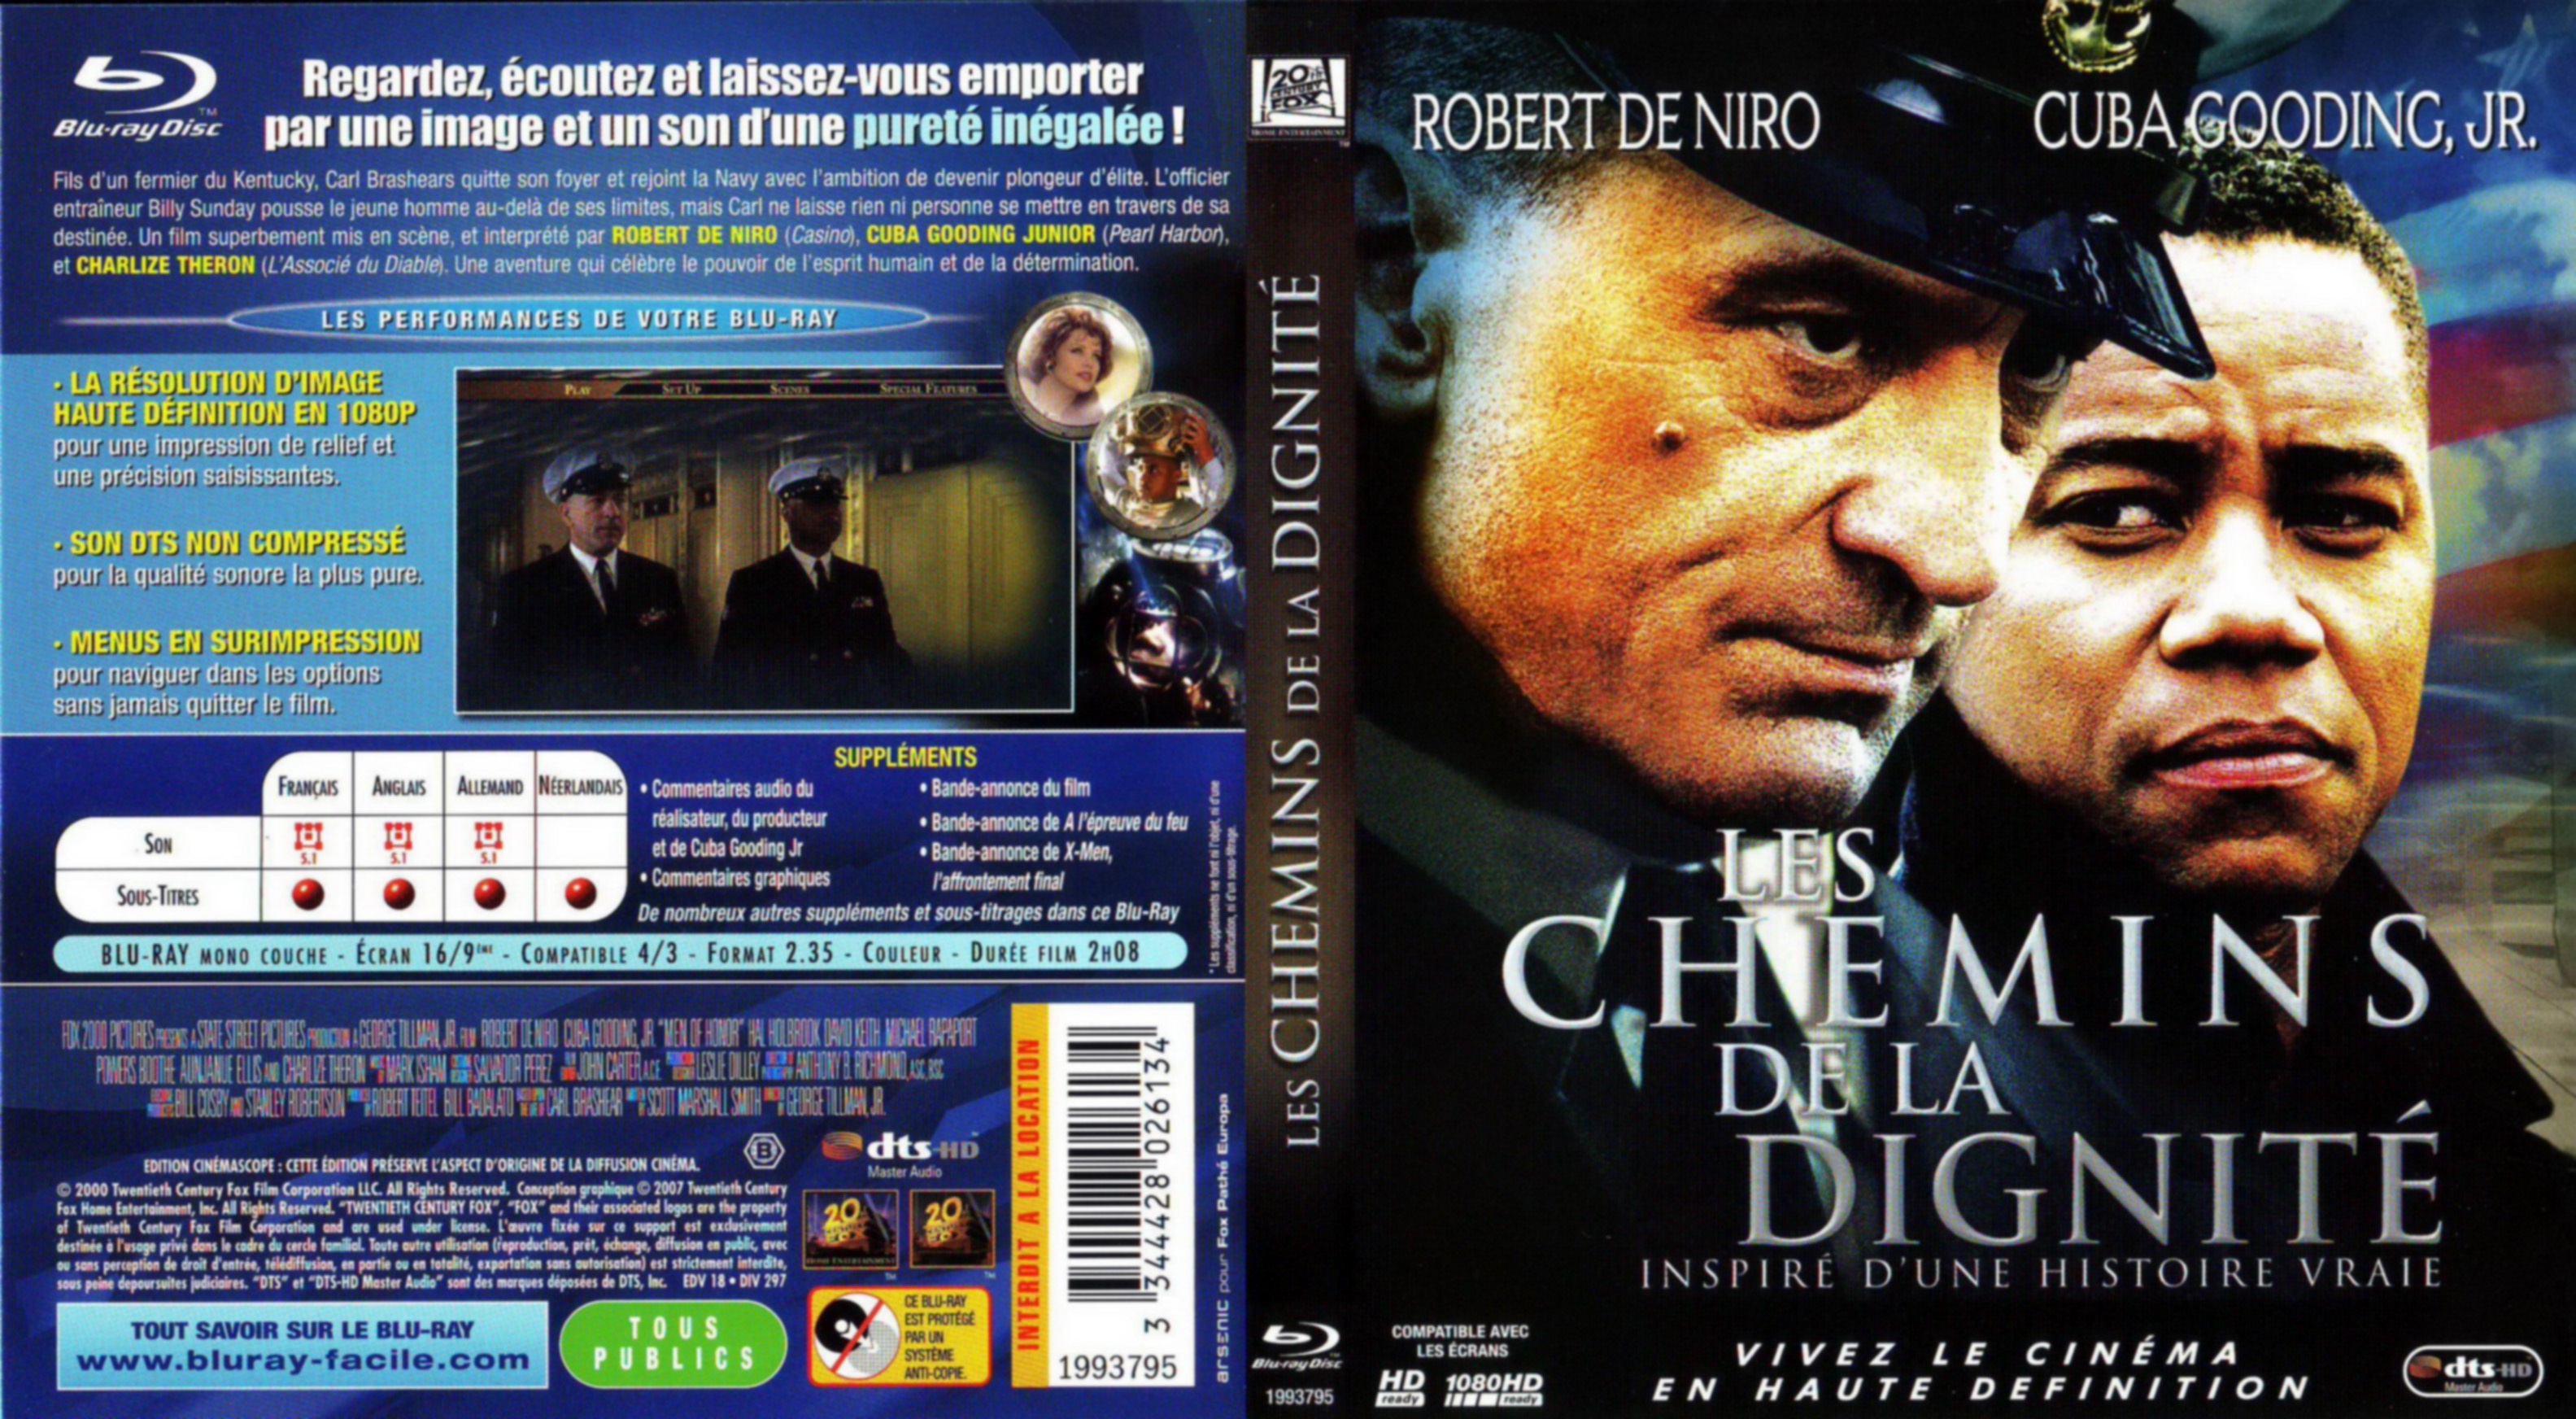 Jaquette DVD Les chemins de la dignite (BLU-RAY)